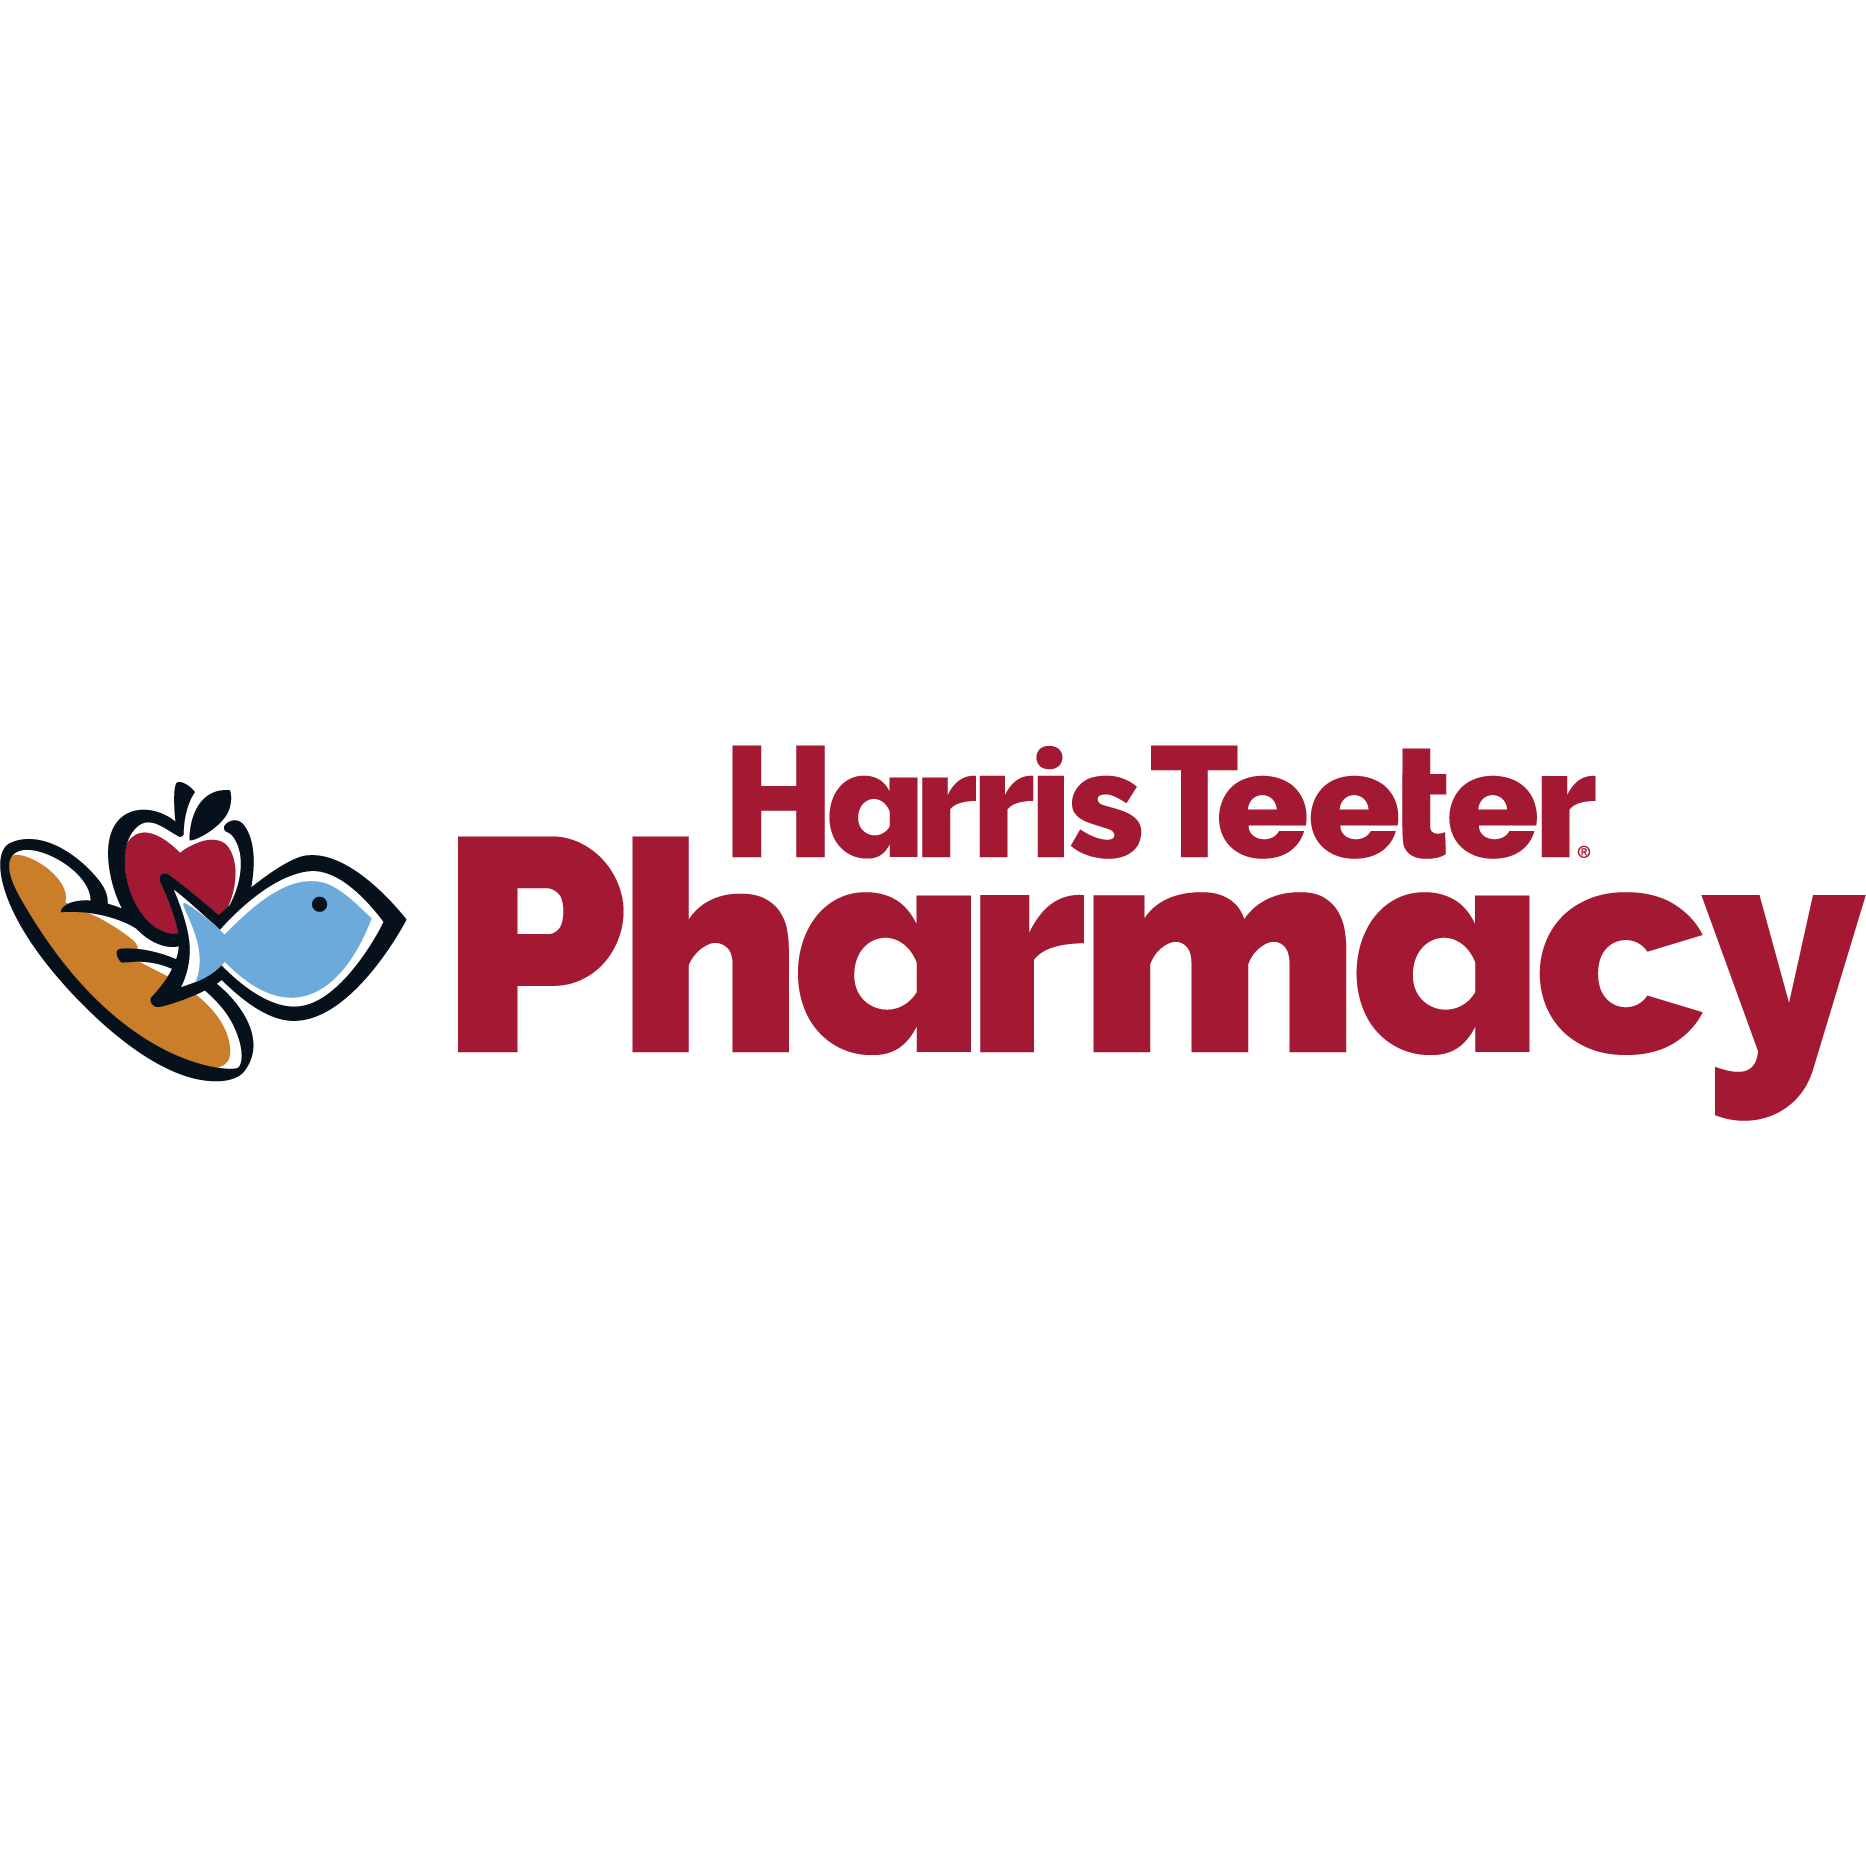 Harris Teeter Pharmacy Baltimore, MD 21224 (410)5220804